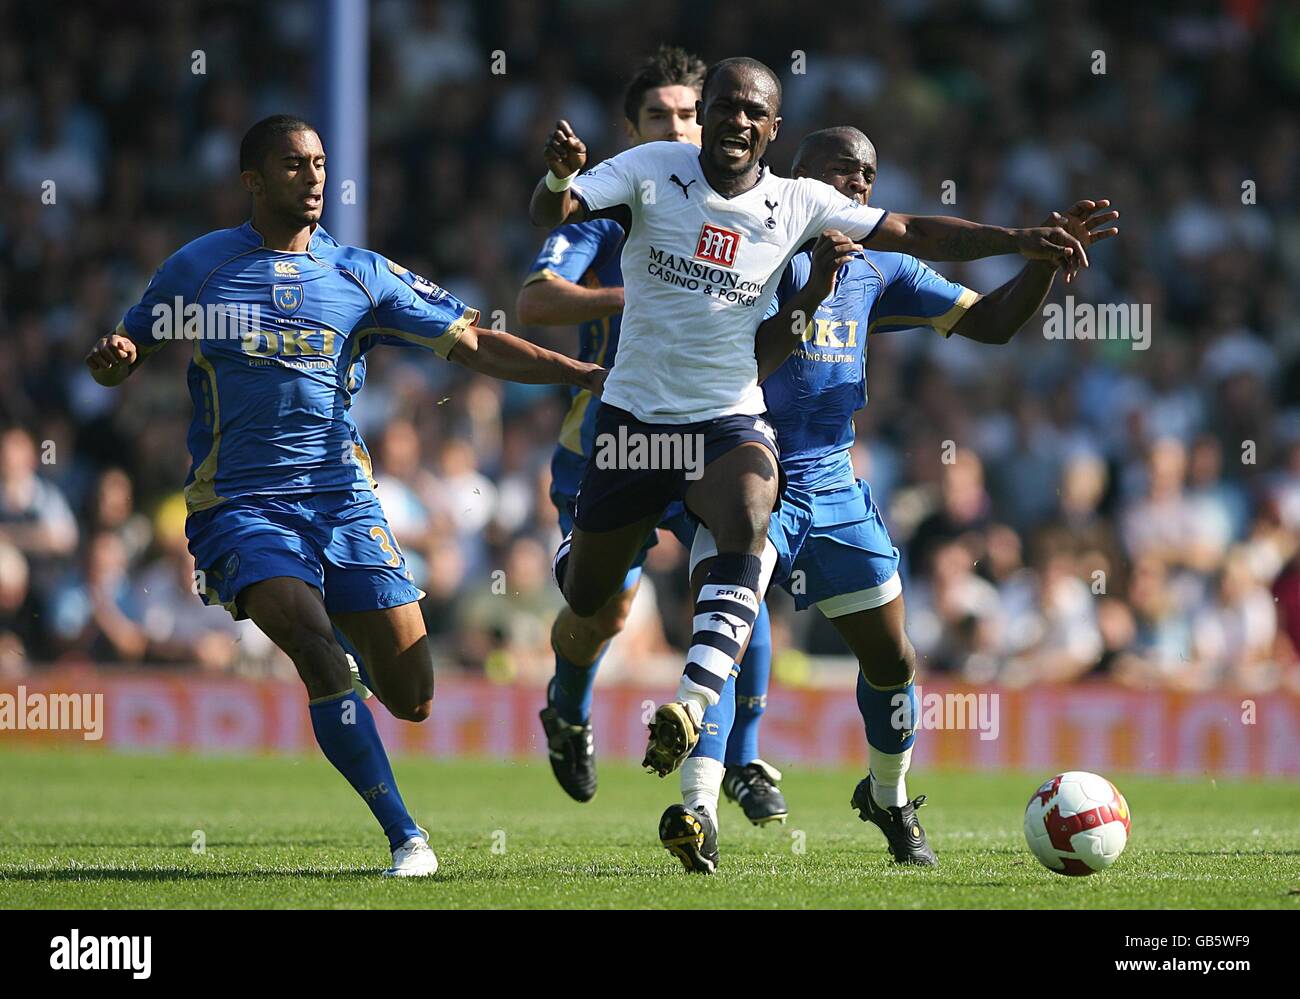 Soccer - Barclays Premier League - Portsmouth v Tottenham Hotspur - Fratton Park. Portsmouth's Lassana Diarra (r) fouls Tottenham Hotspur's Didier Zokora (c) as they battle for the ball Stock Photo